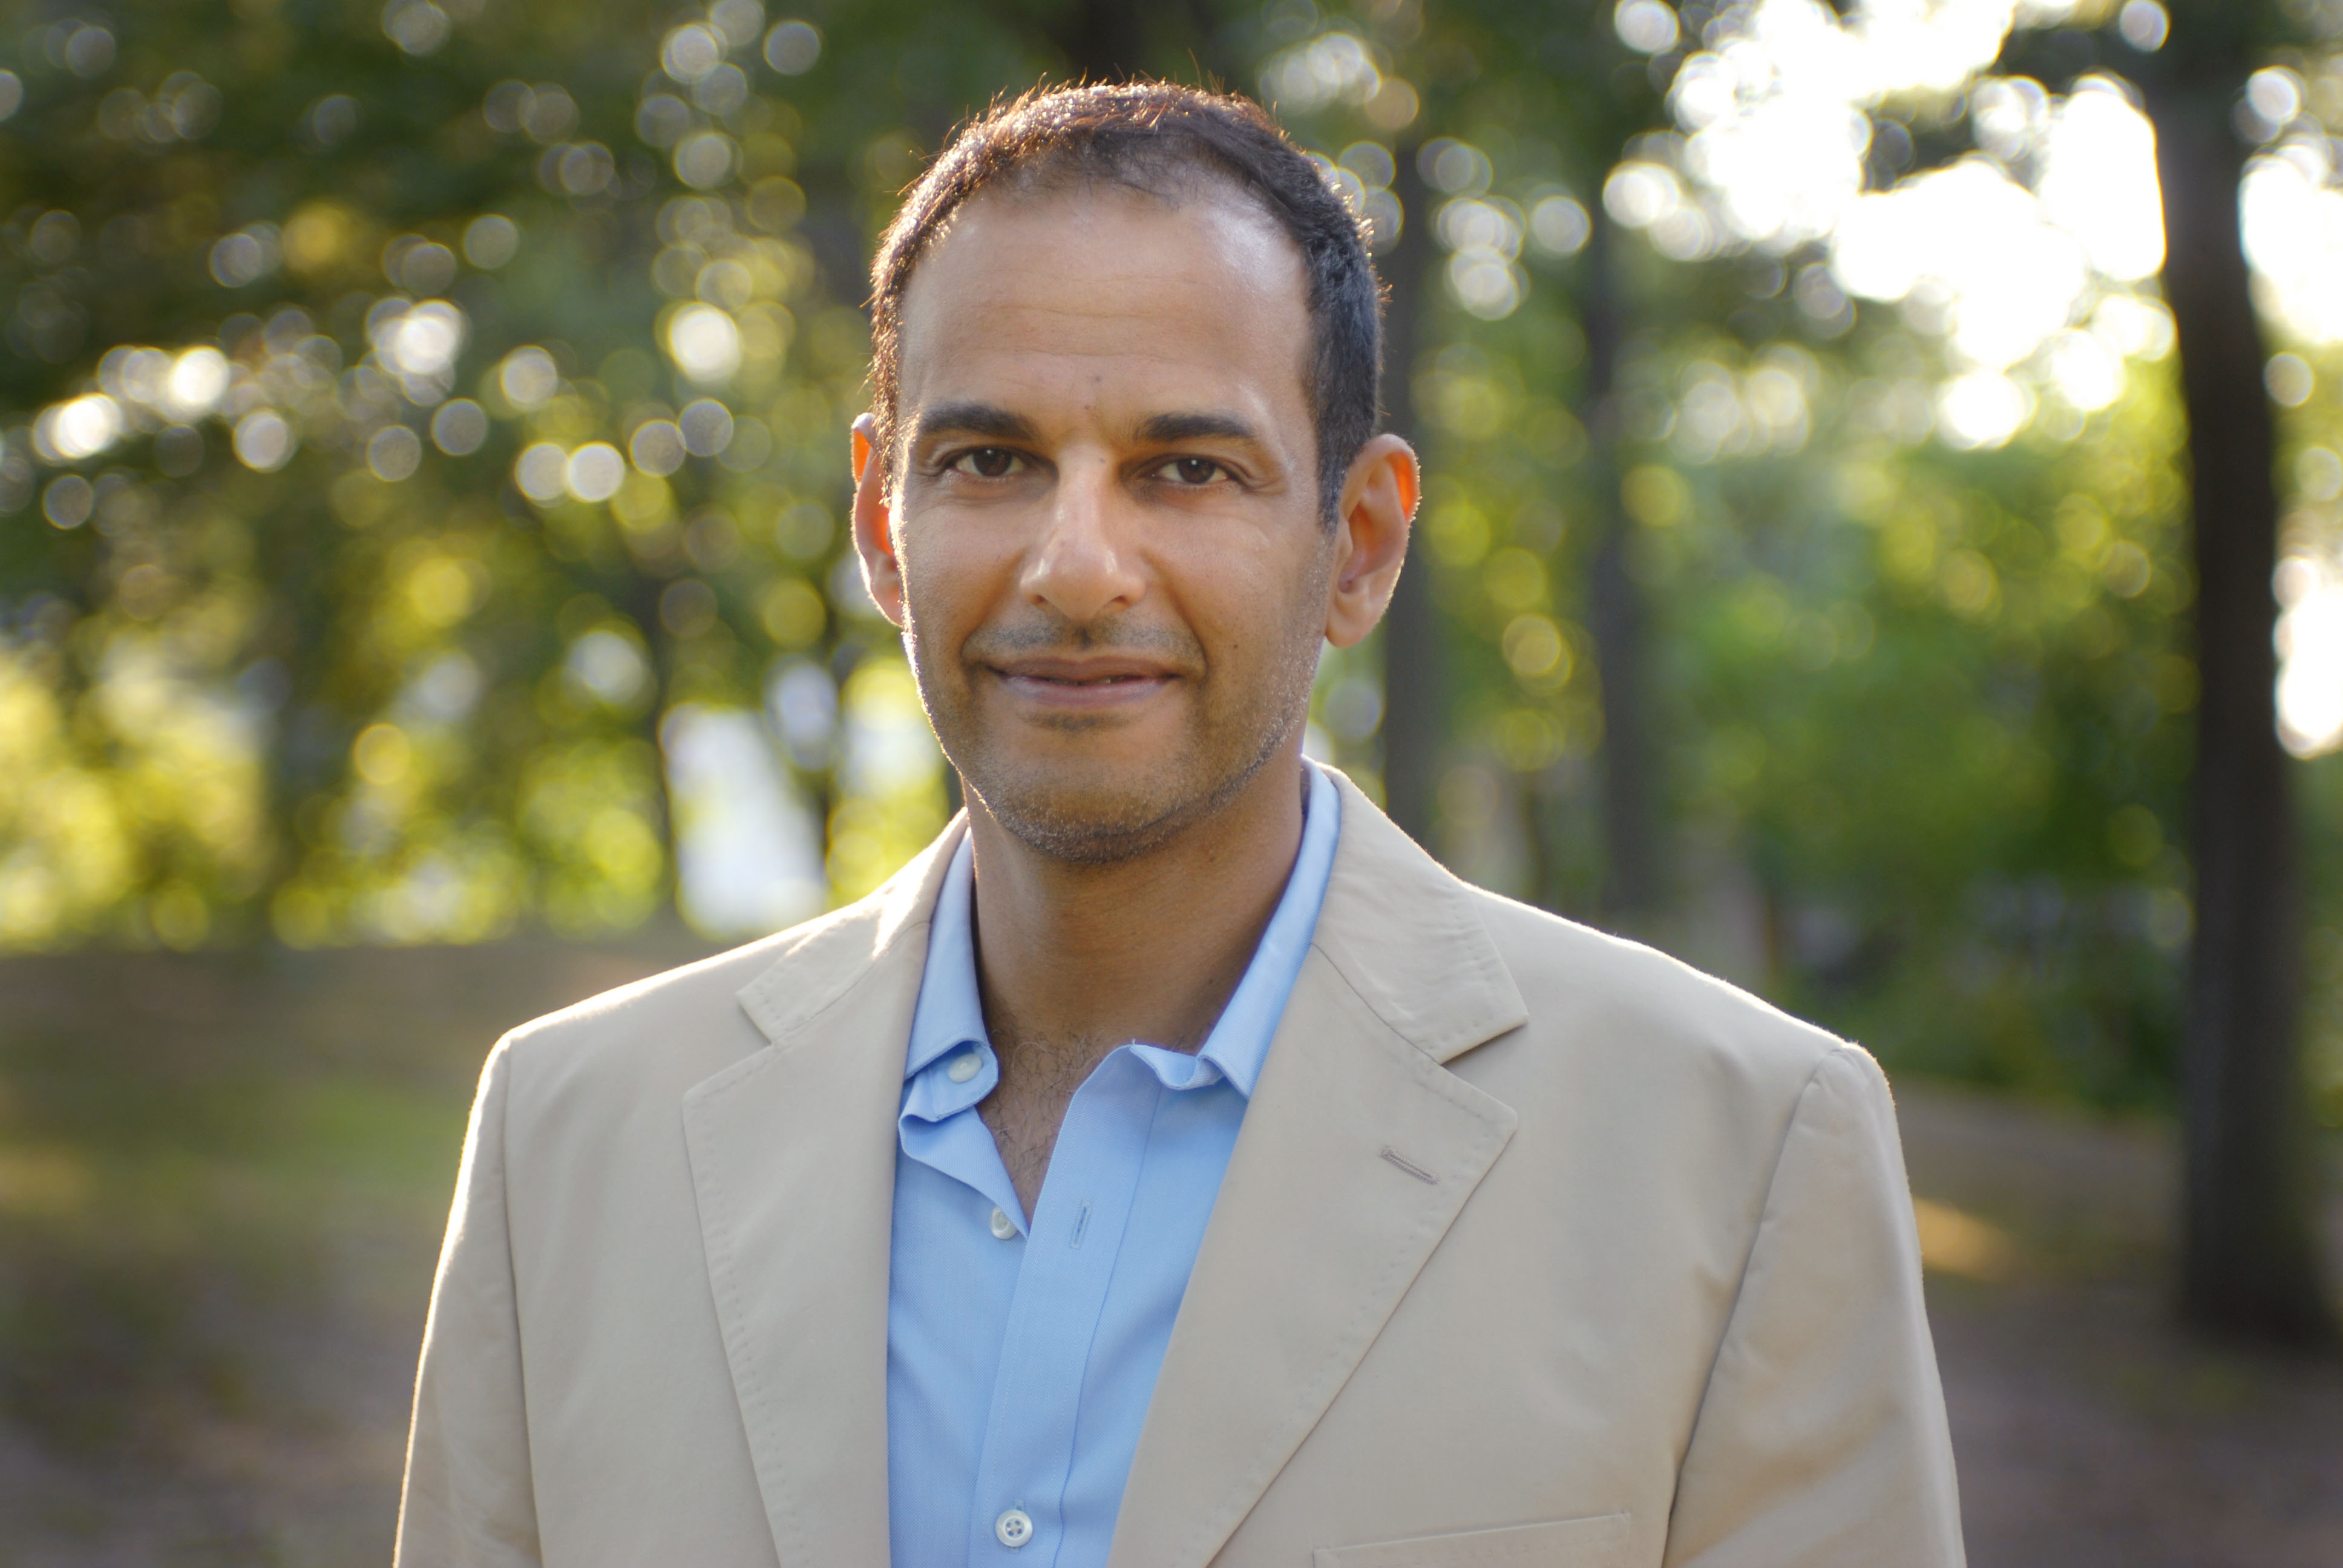 Mustafa Bayoumi is an award-winning author that will speak to UALR students Sept. 22.